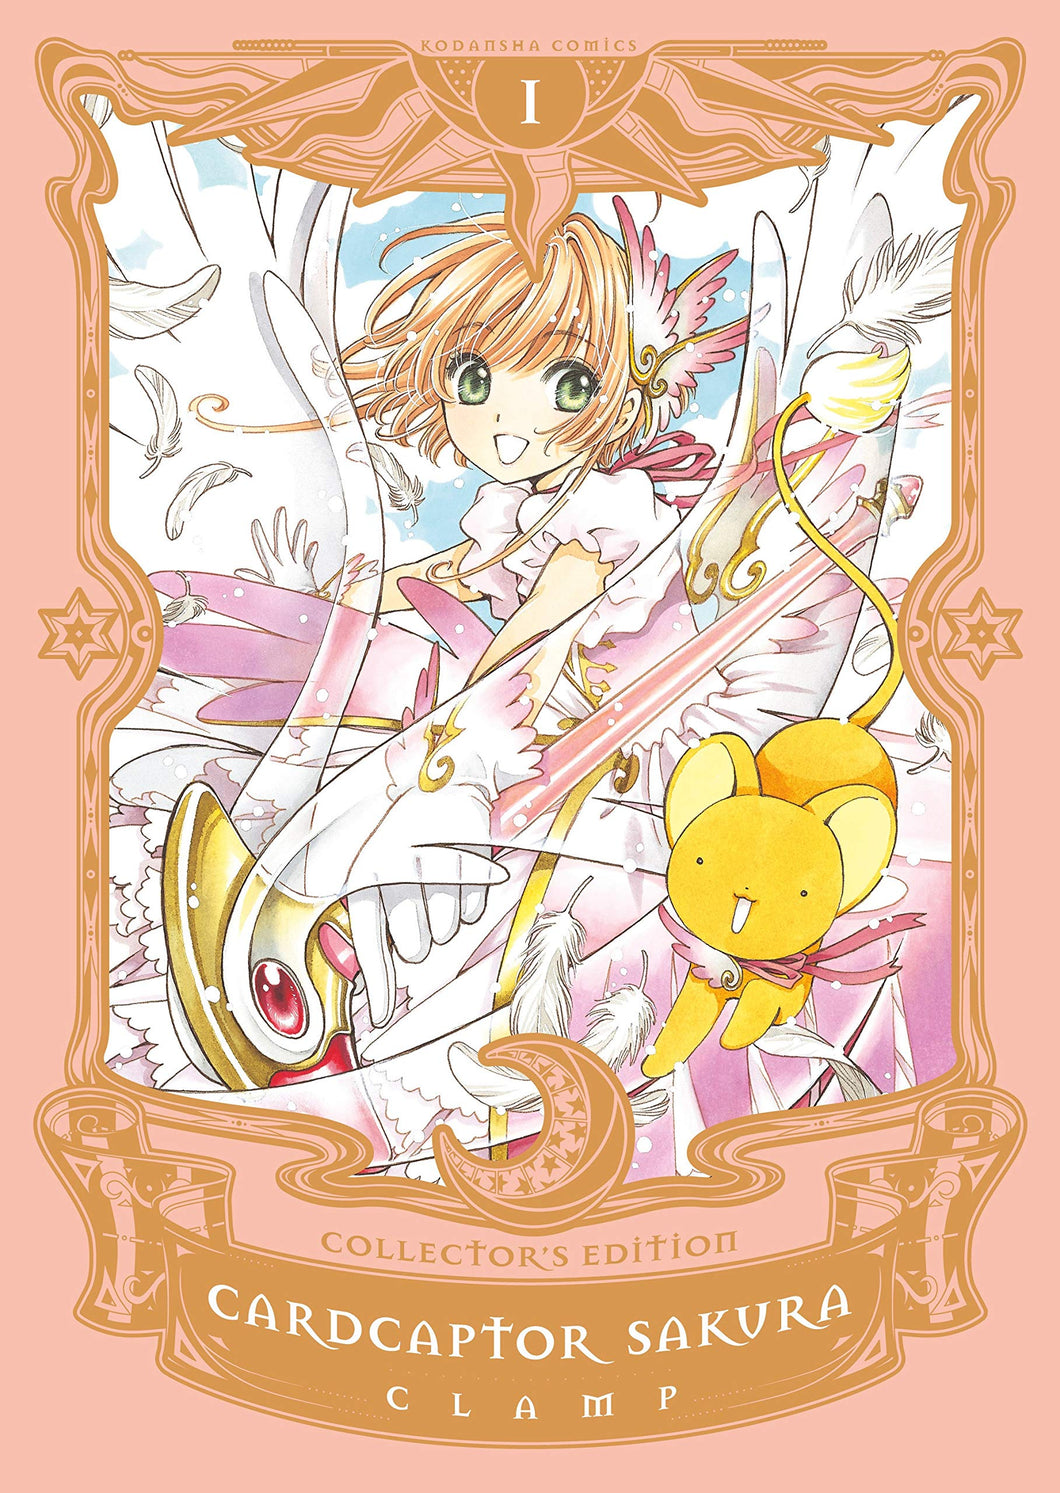 Cardcaptor Sakura Collector's Edition HC Volume 1